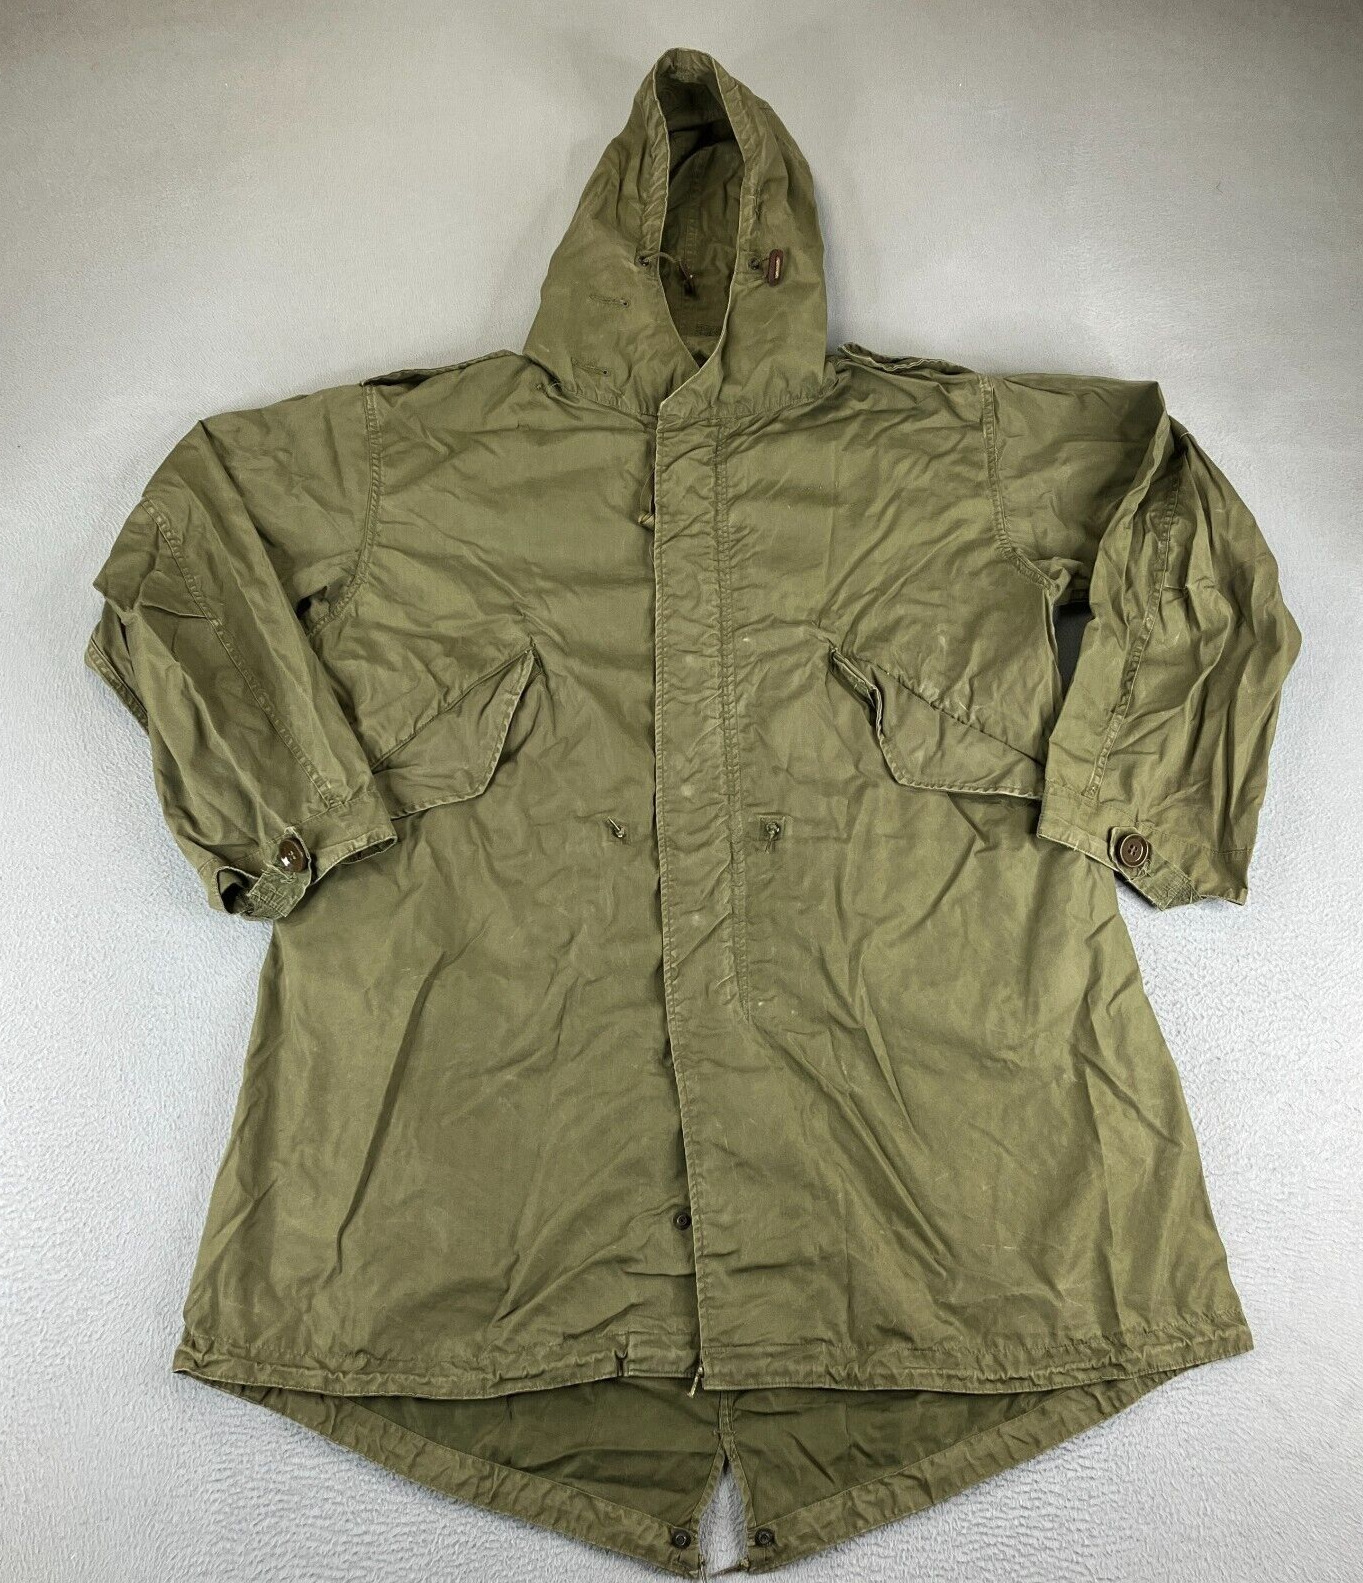 Vintage Military Jacket Small Green Parka Shell M-1951 Nylon Oxford OG Shade 107